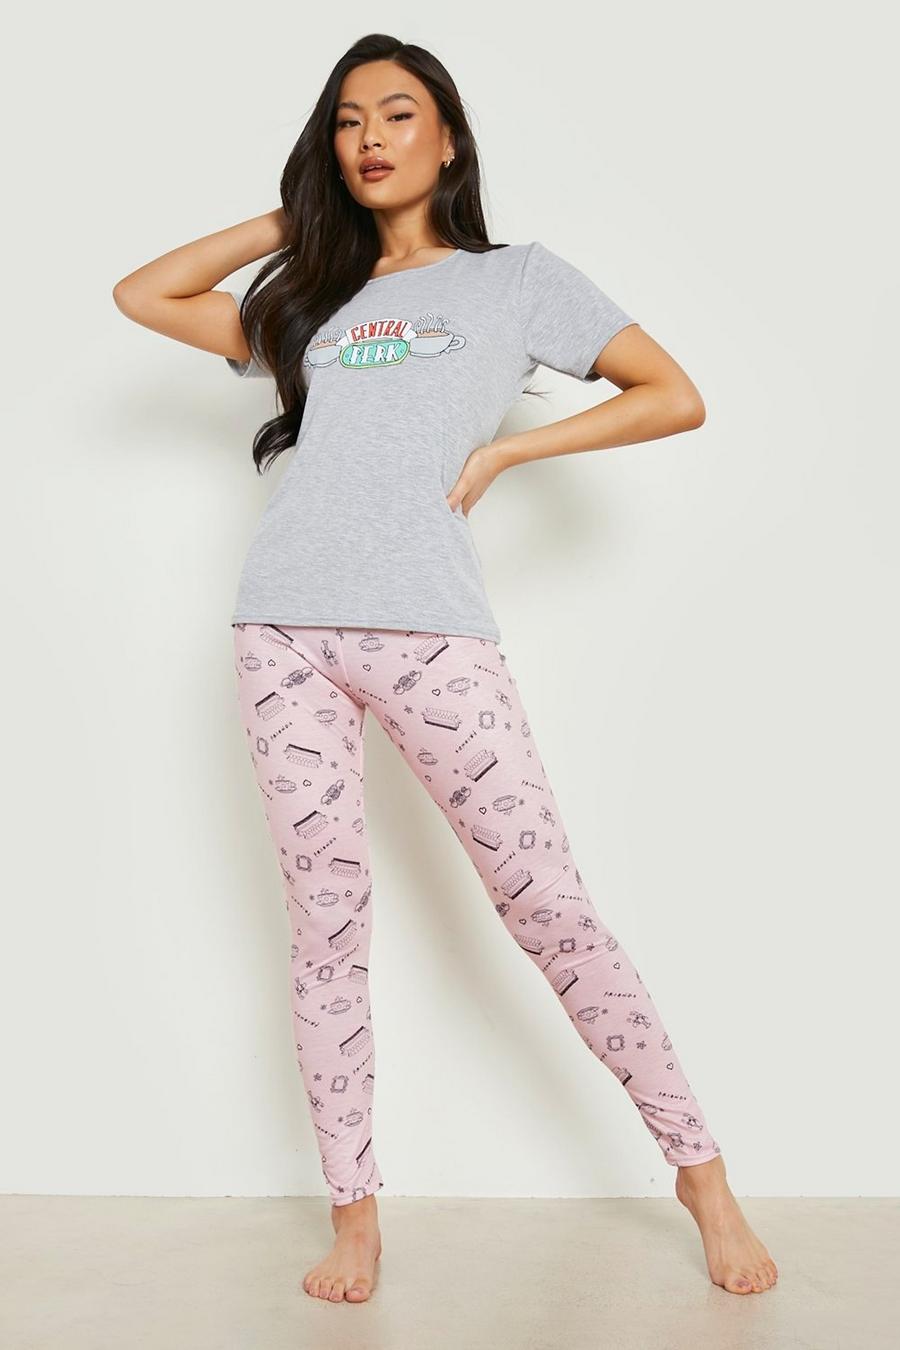 Ensemble pyjama avec legging Friends "Central Perk", Blush image number 1